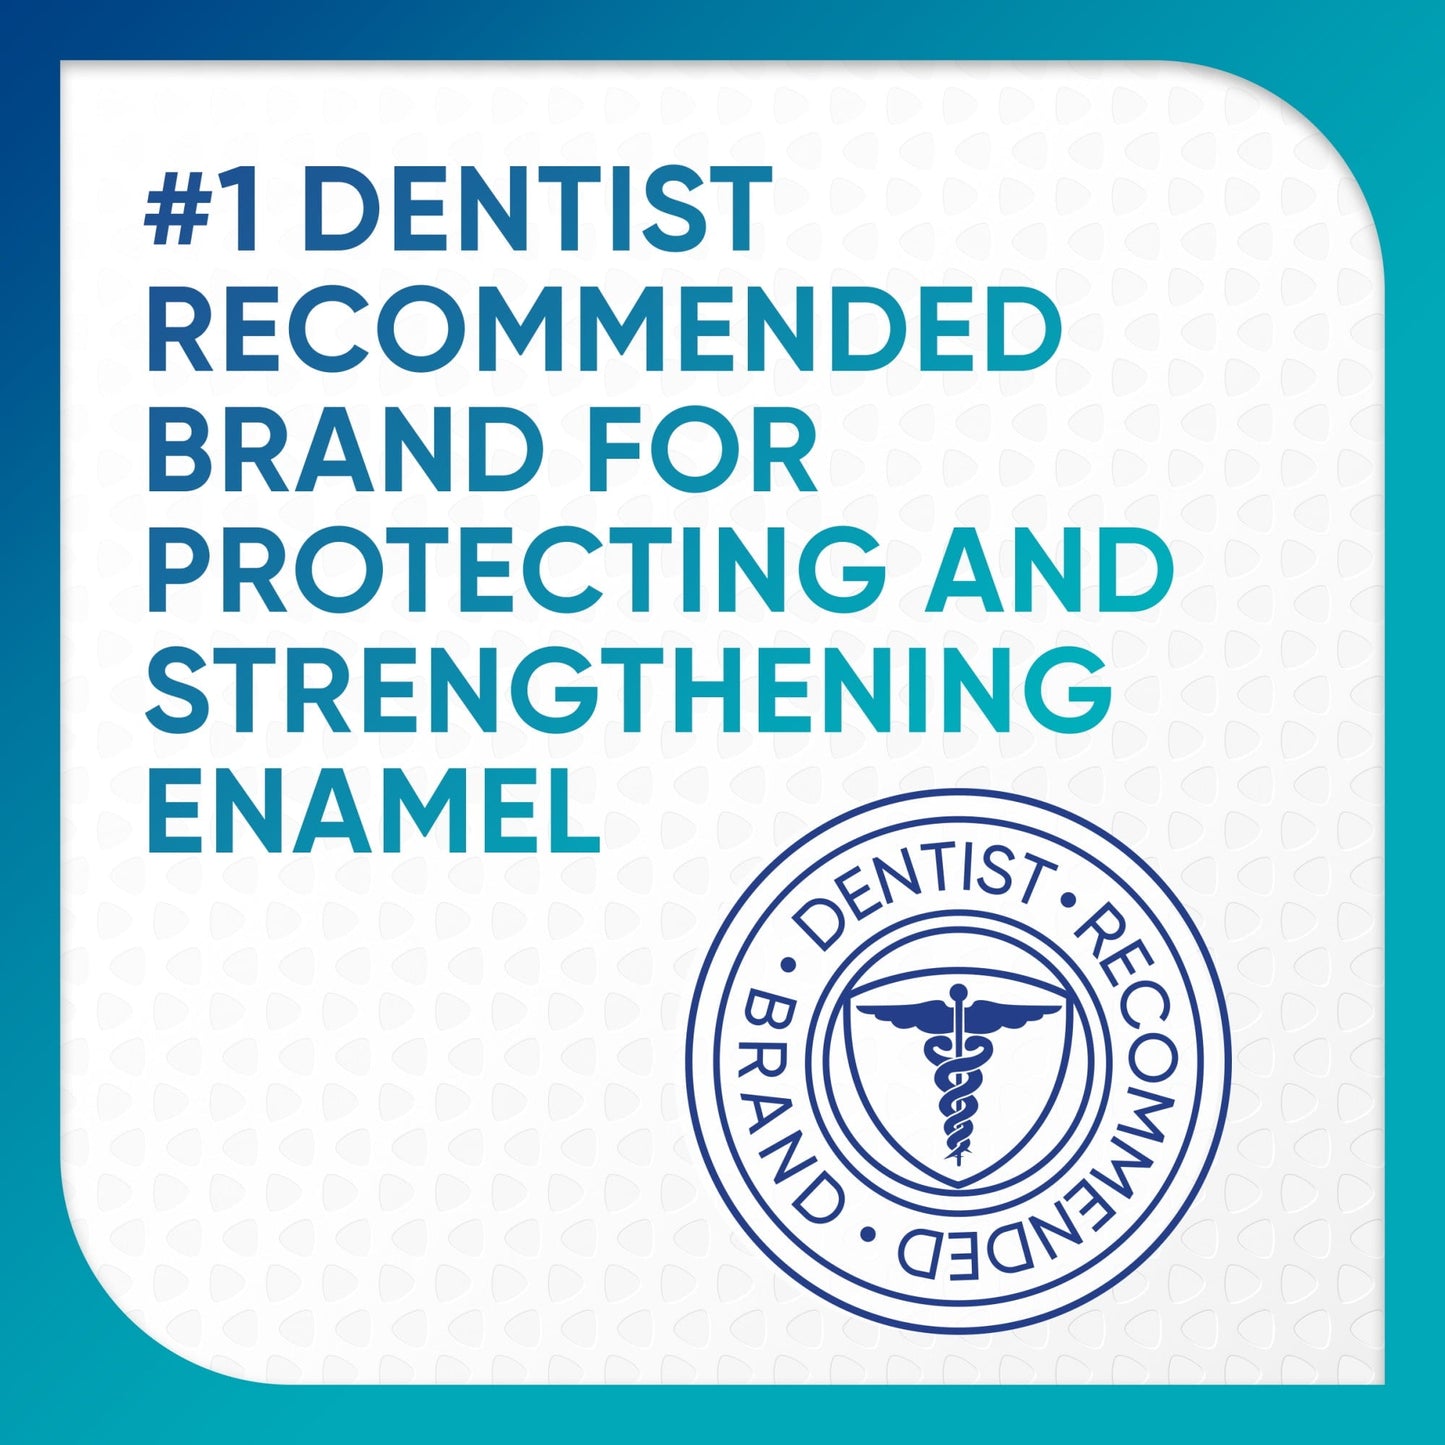 Sensodyne Pronamel Intensive Enamel Repair Sensitive Toothpaste, Extra Fresh, 3.4 Oz